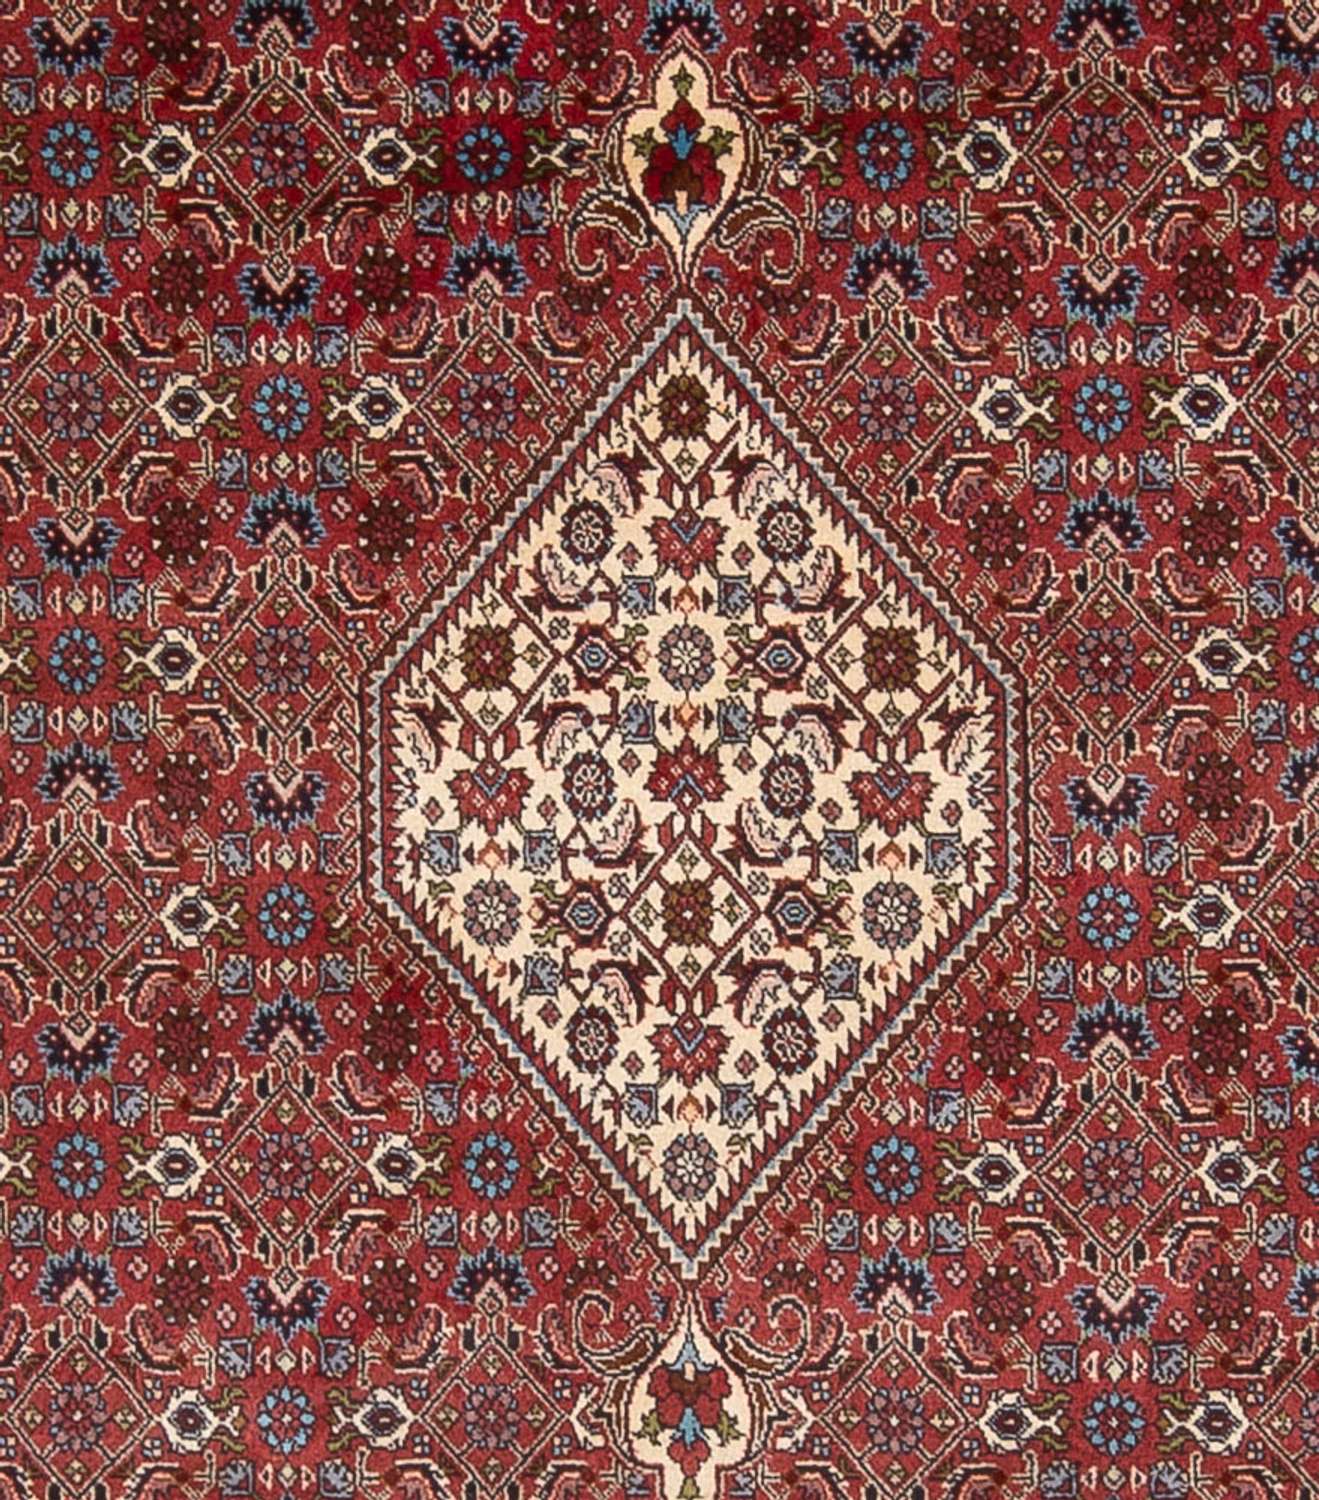 Persisk matta - Bijar - Royal - 294 x 253 cm - mörkröd